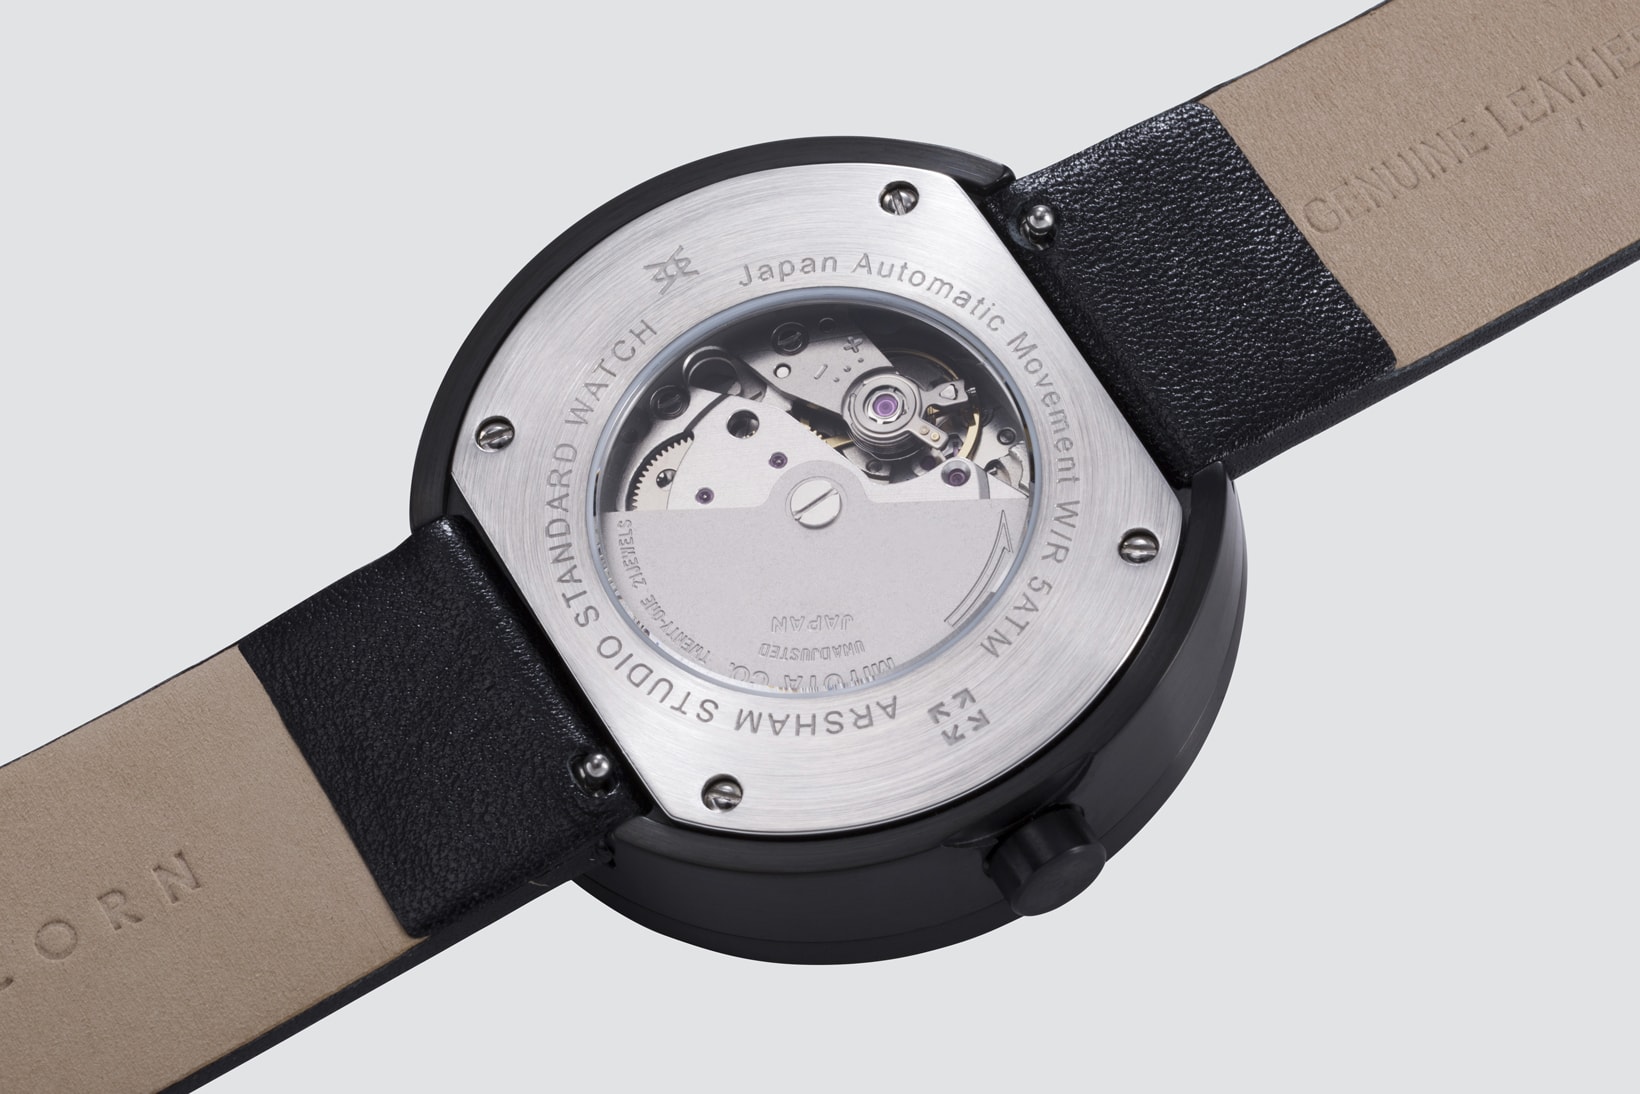 daniel arsham studio standard watch anicorn collaboration accessories design